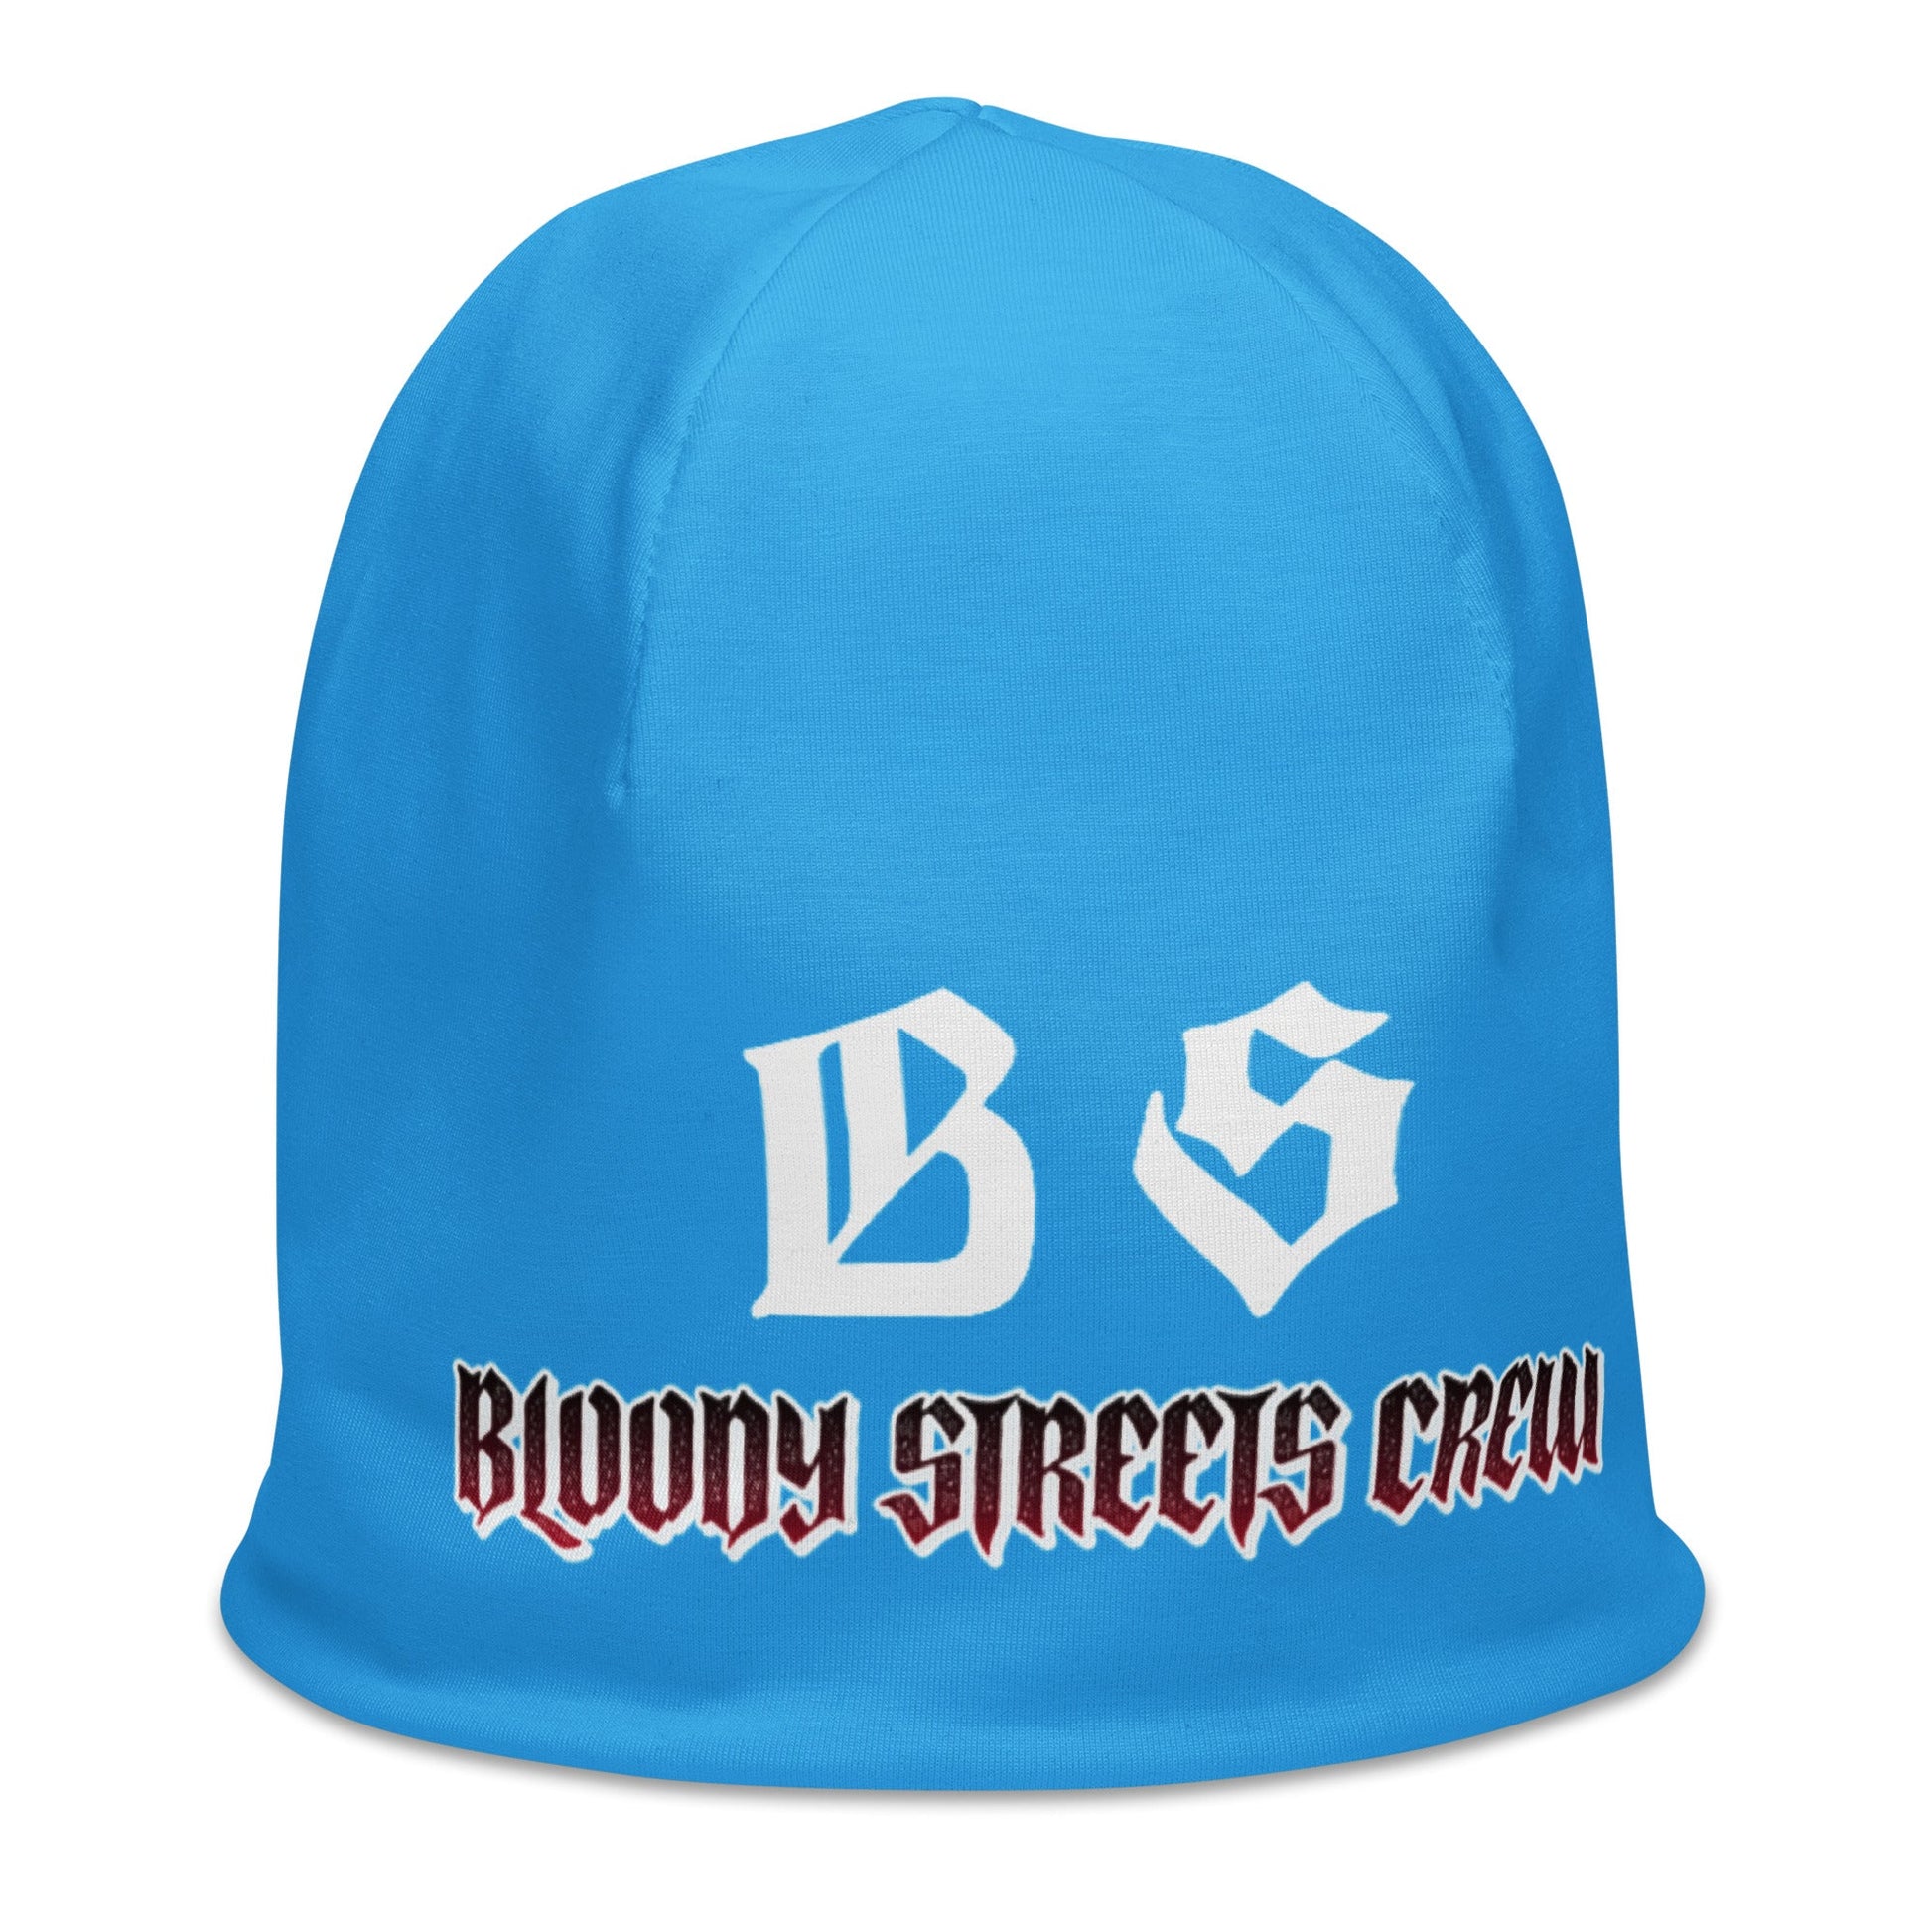 Bloody Streets Crew Member Beanie Blue - BLOODY-STREETS.DE Streetwear Herren und Damen Hoodies, T-Shirts, Pullis